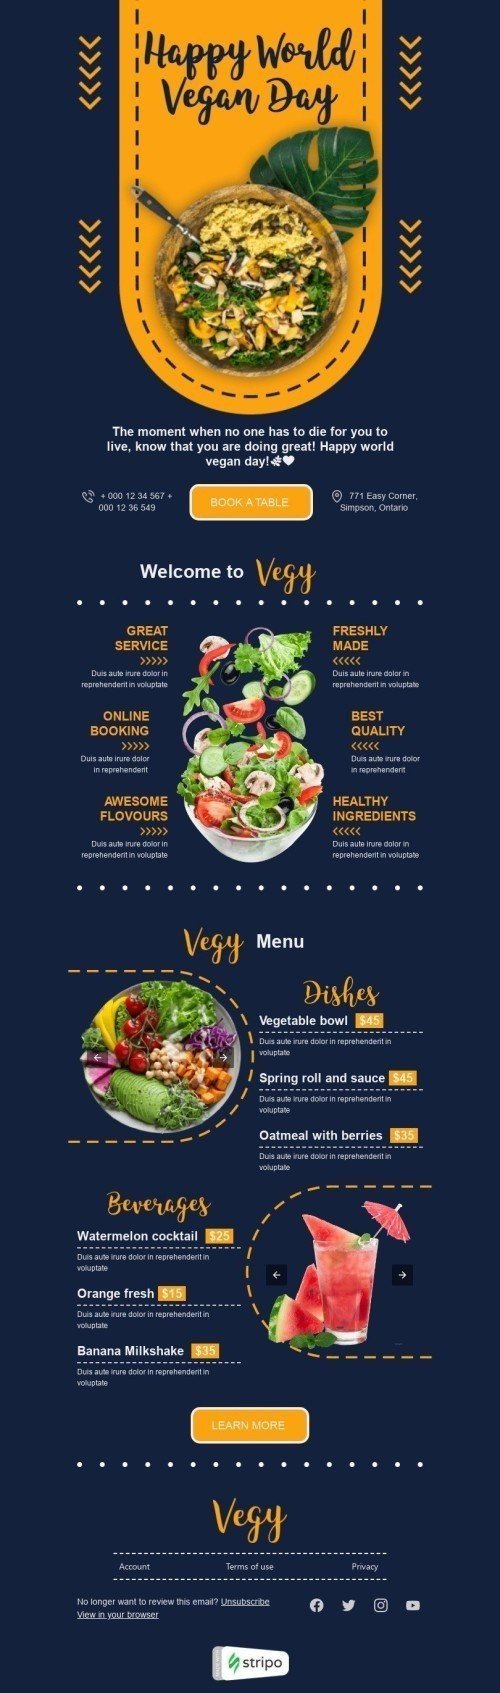 World Vegan Day Email Template «Vegan restaurant» for Restaurants industry desktop view